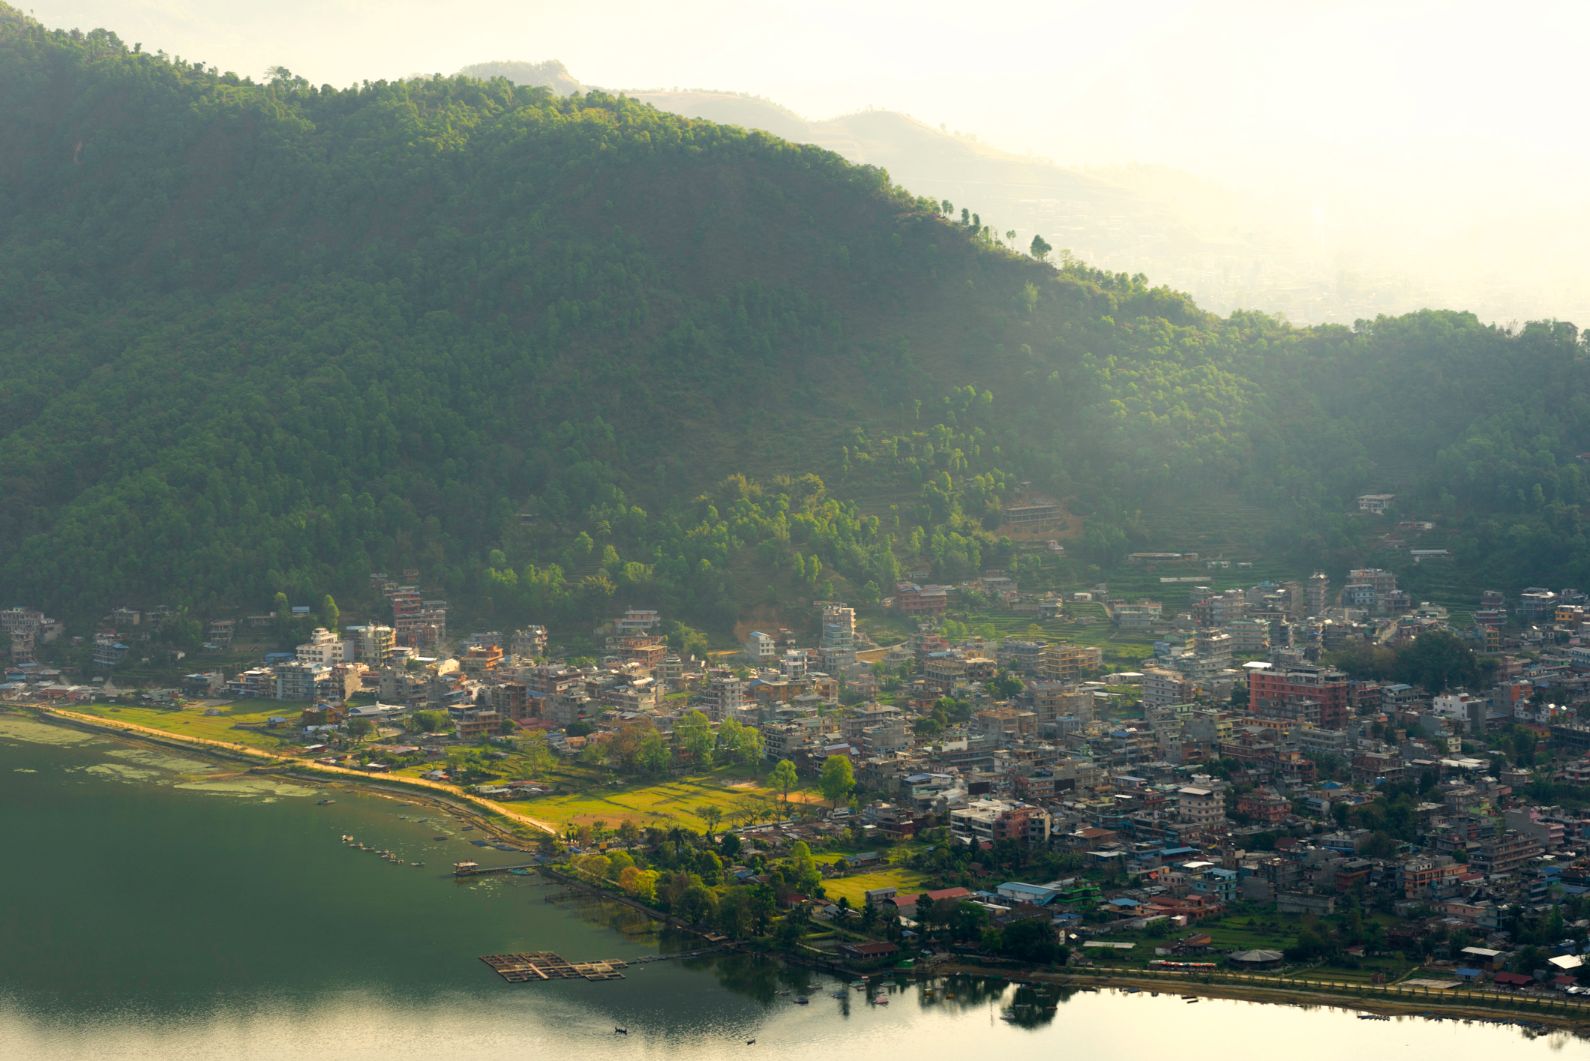 The city of Pokhara, on Phewa Lake.